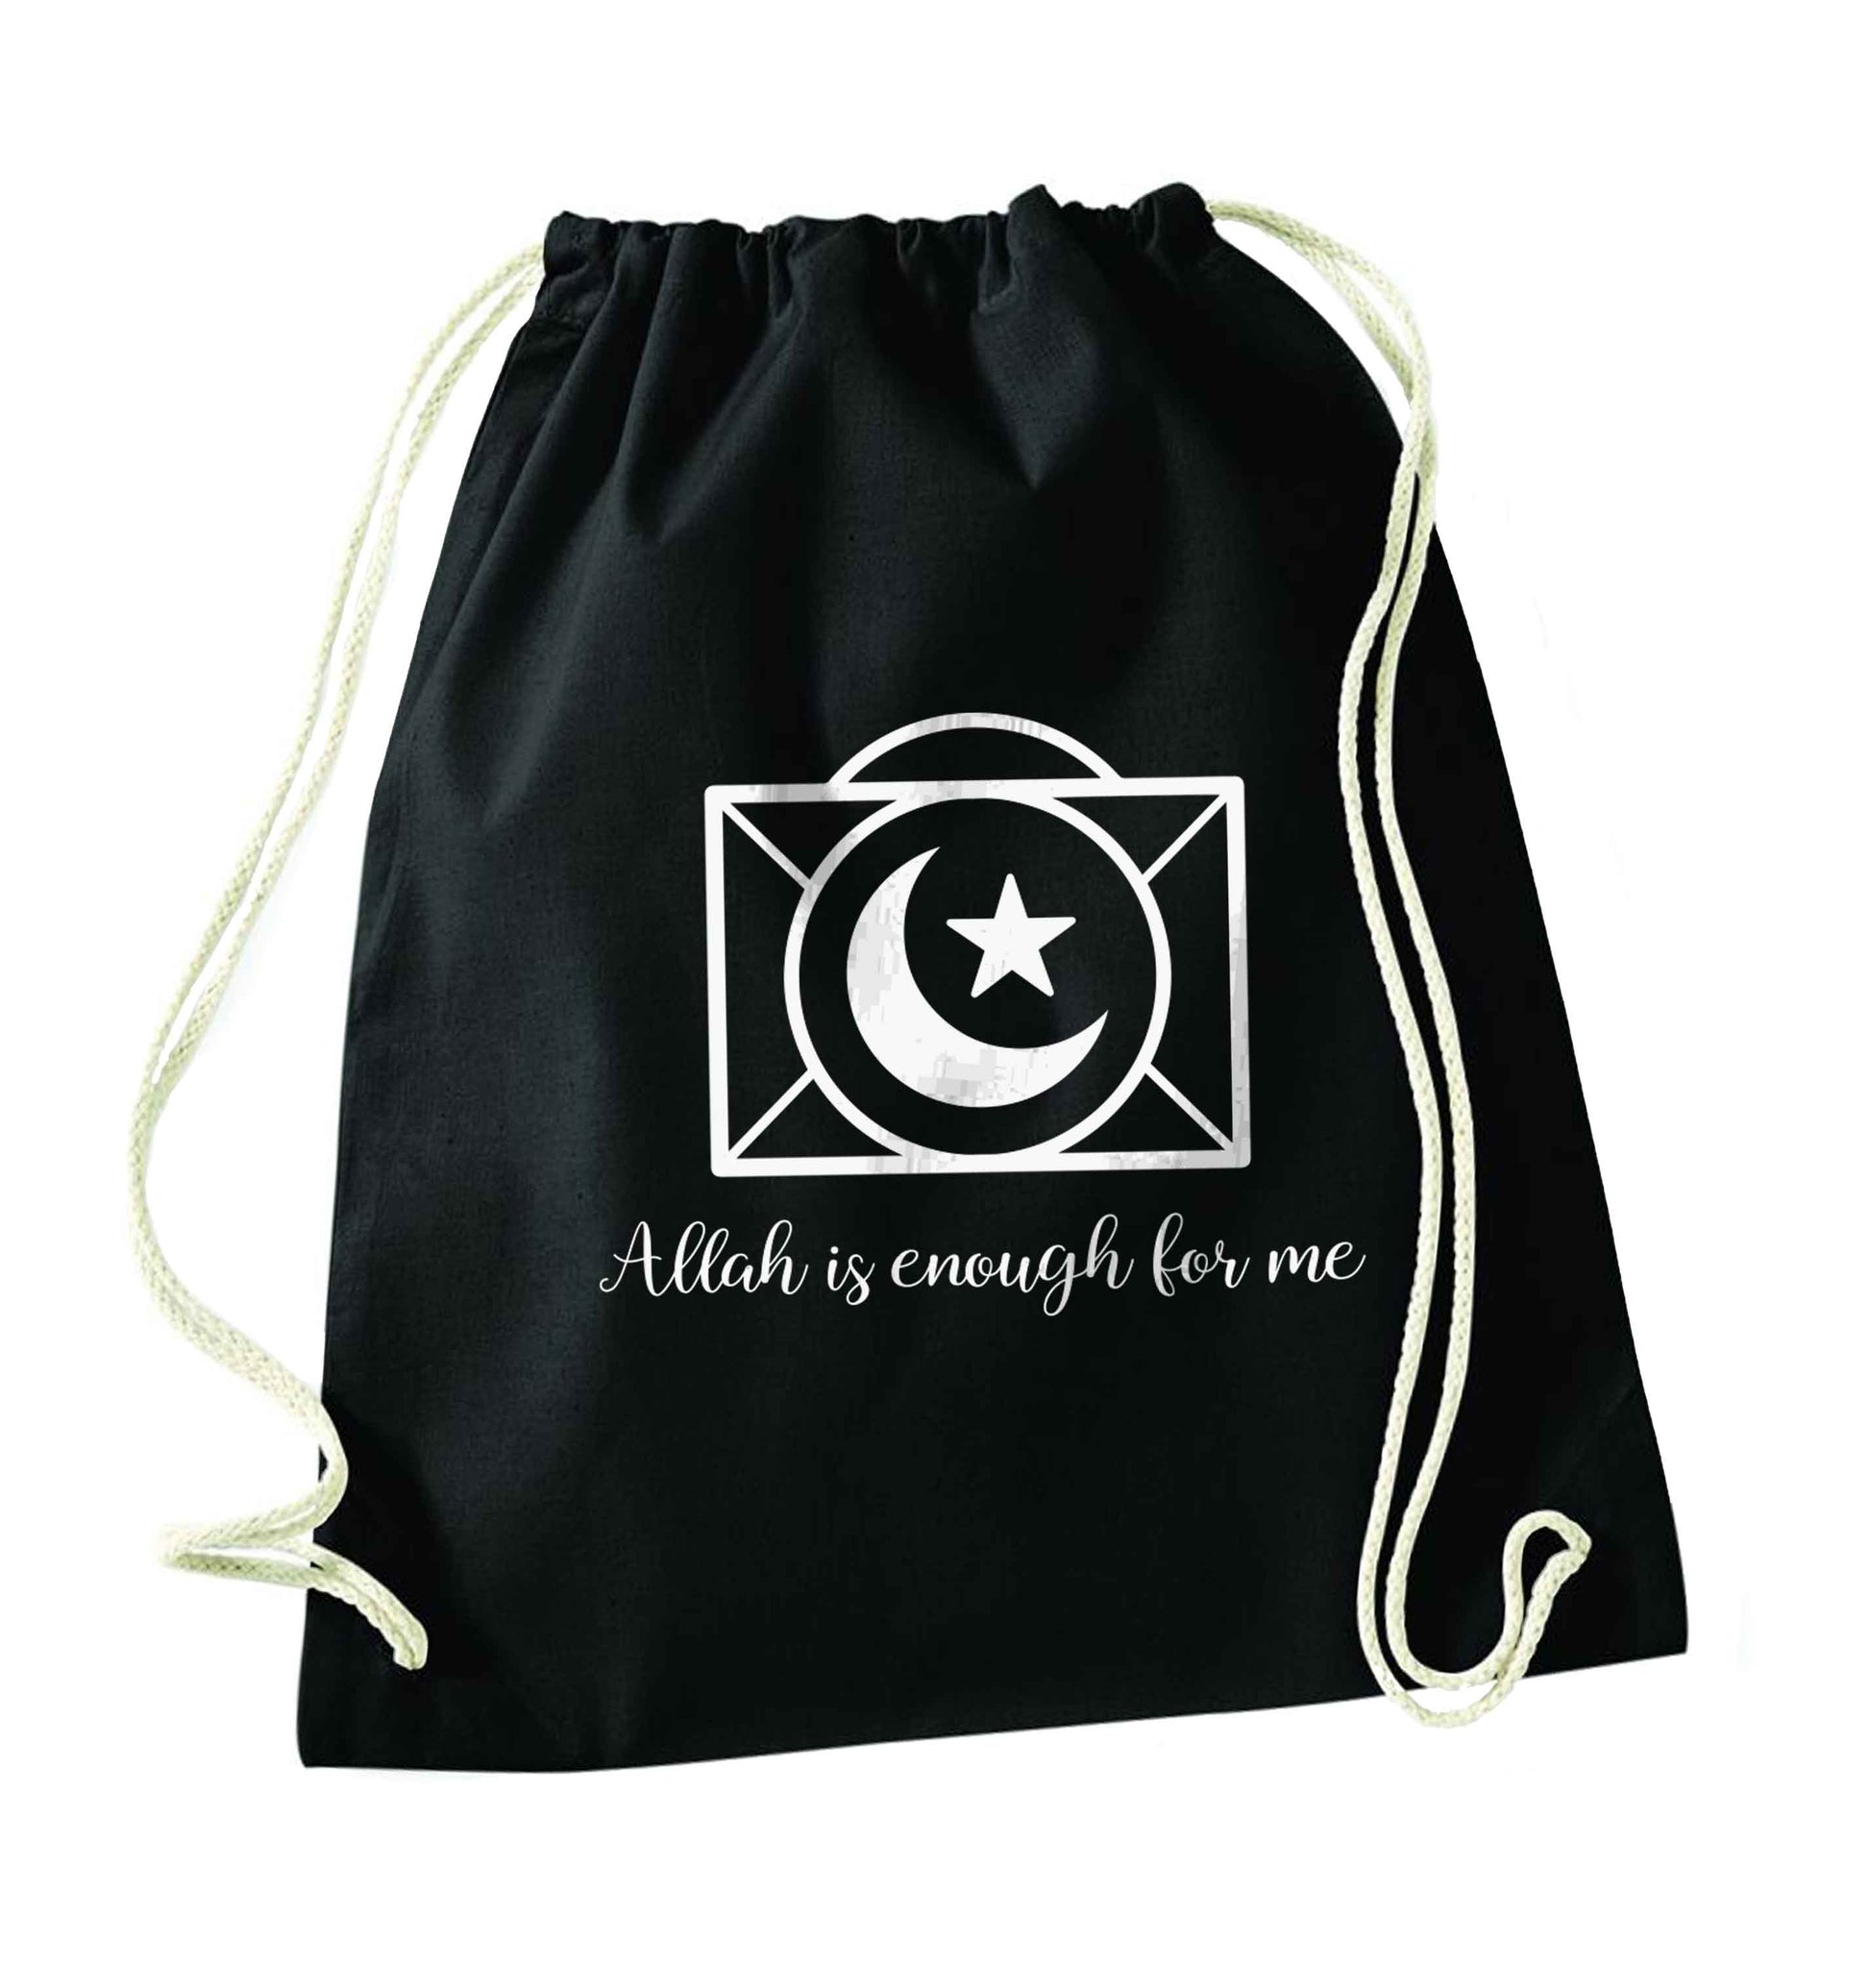 Allah is enough for me black drawstring bag